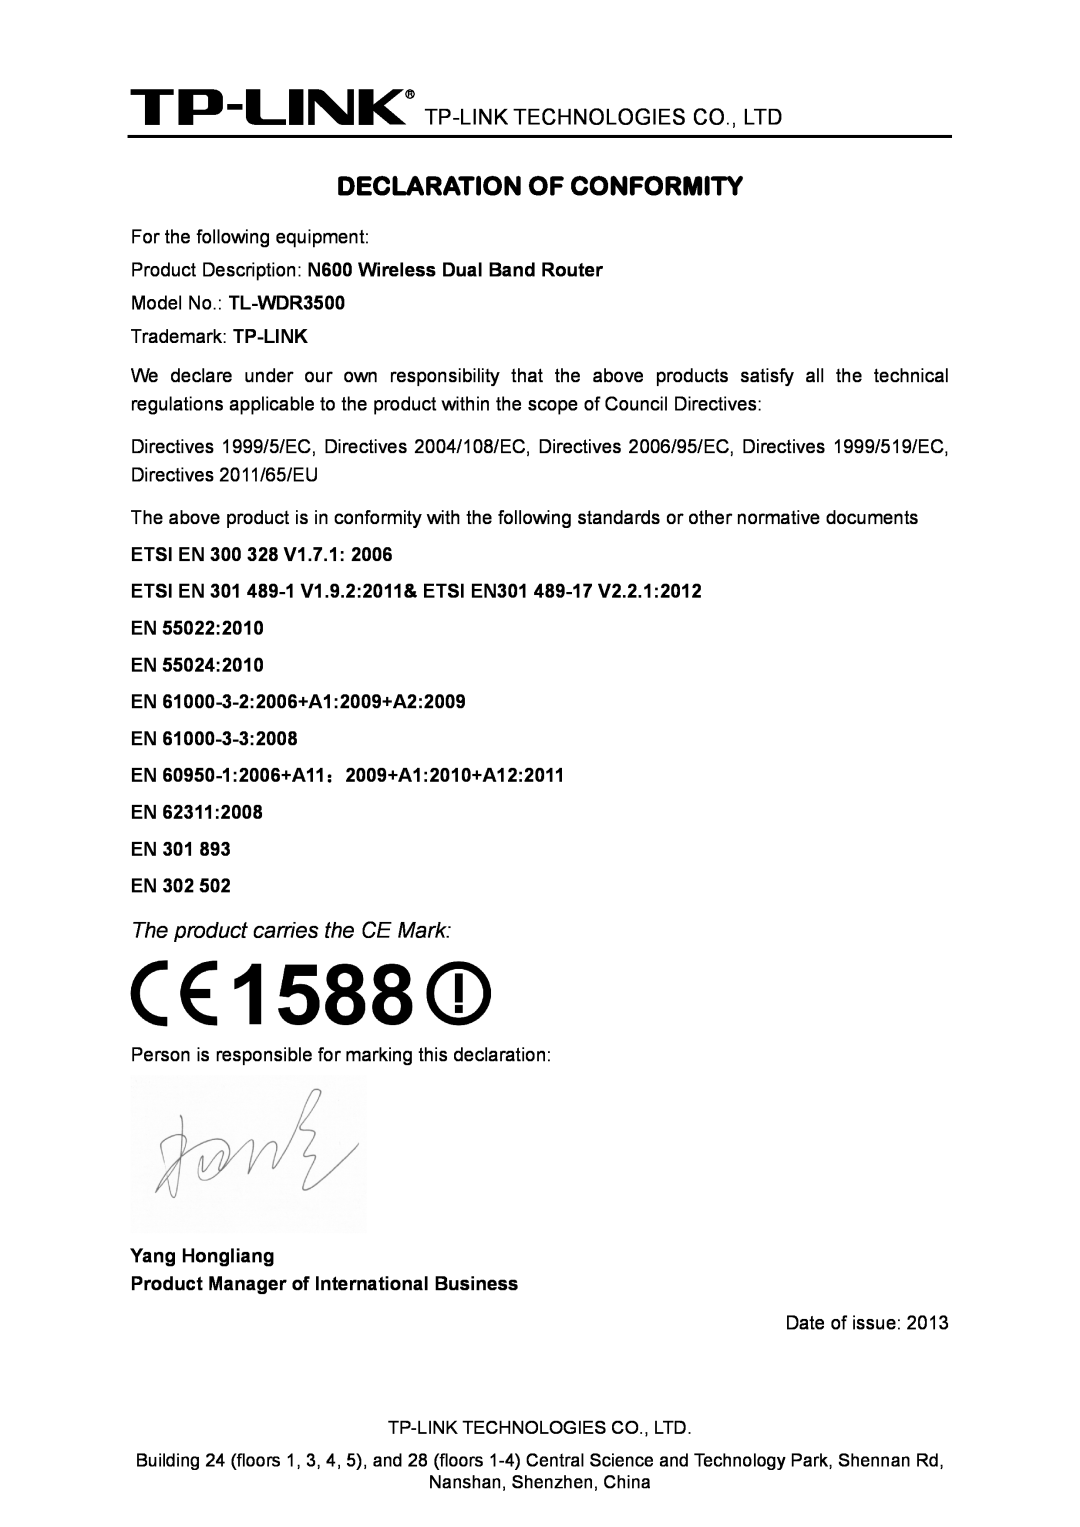 TP-Link TL-WDR3500 Declaration Of Conformity, Product Description N600 Wireless Dual Band Router, ETSI EN 300 328 V1.7.1 